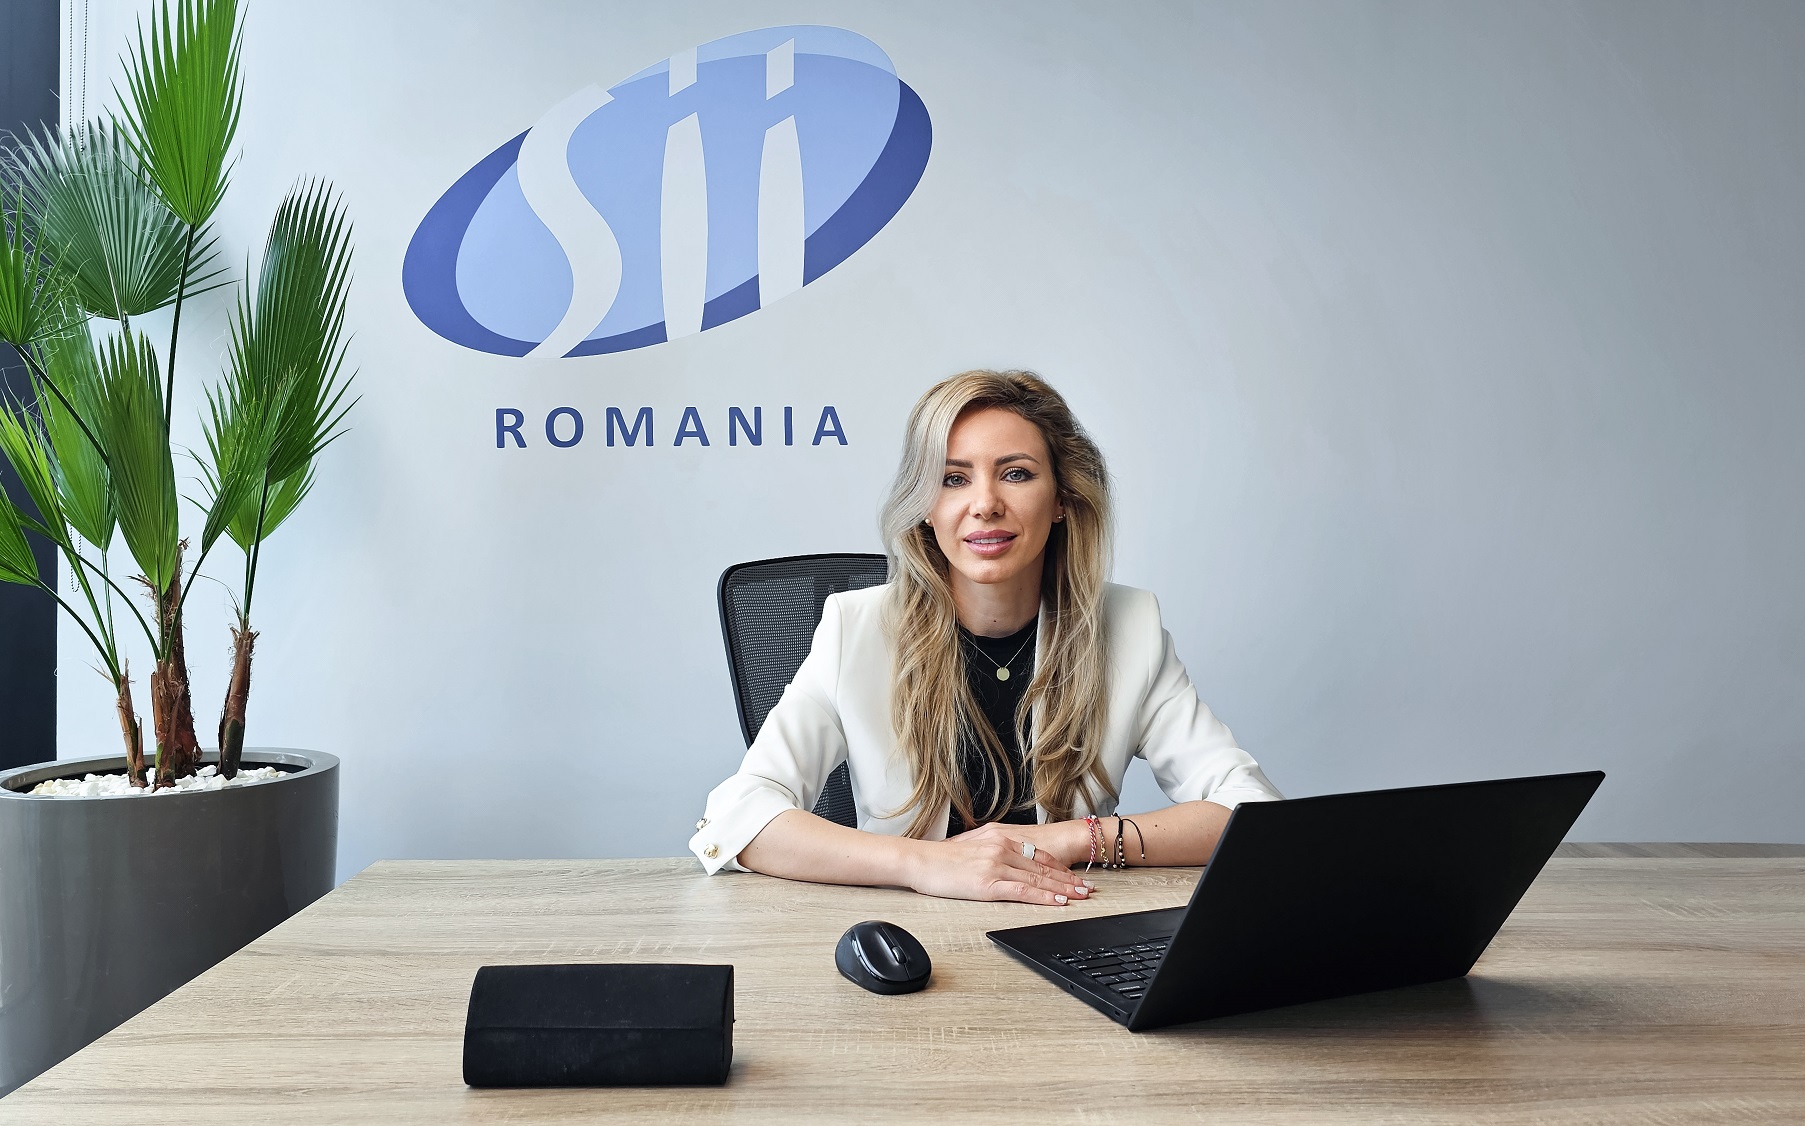 SII Romania has a new CEO: Iulia Surugiu takes over the management of the company locally